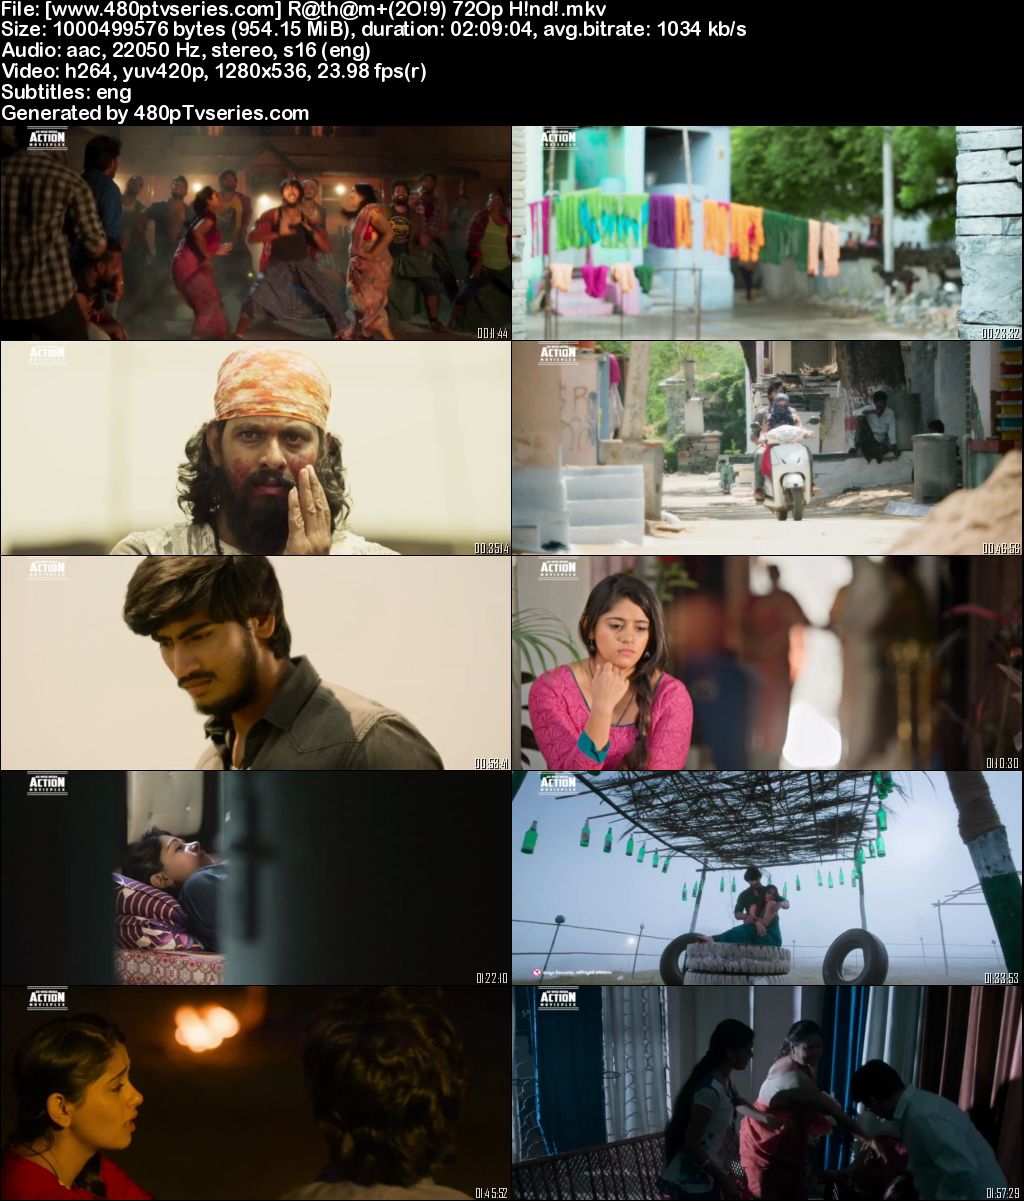 Ratham (2019) Full Hindi Dubbed Movie Download 480p 720p HDRip Free Watch Online Full Movie Download Worldfree4u 9xmovies